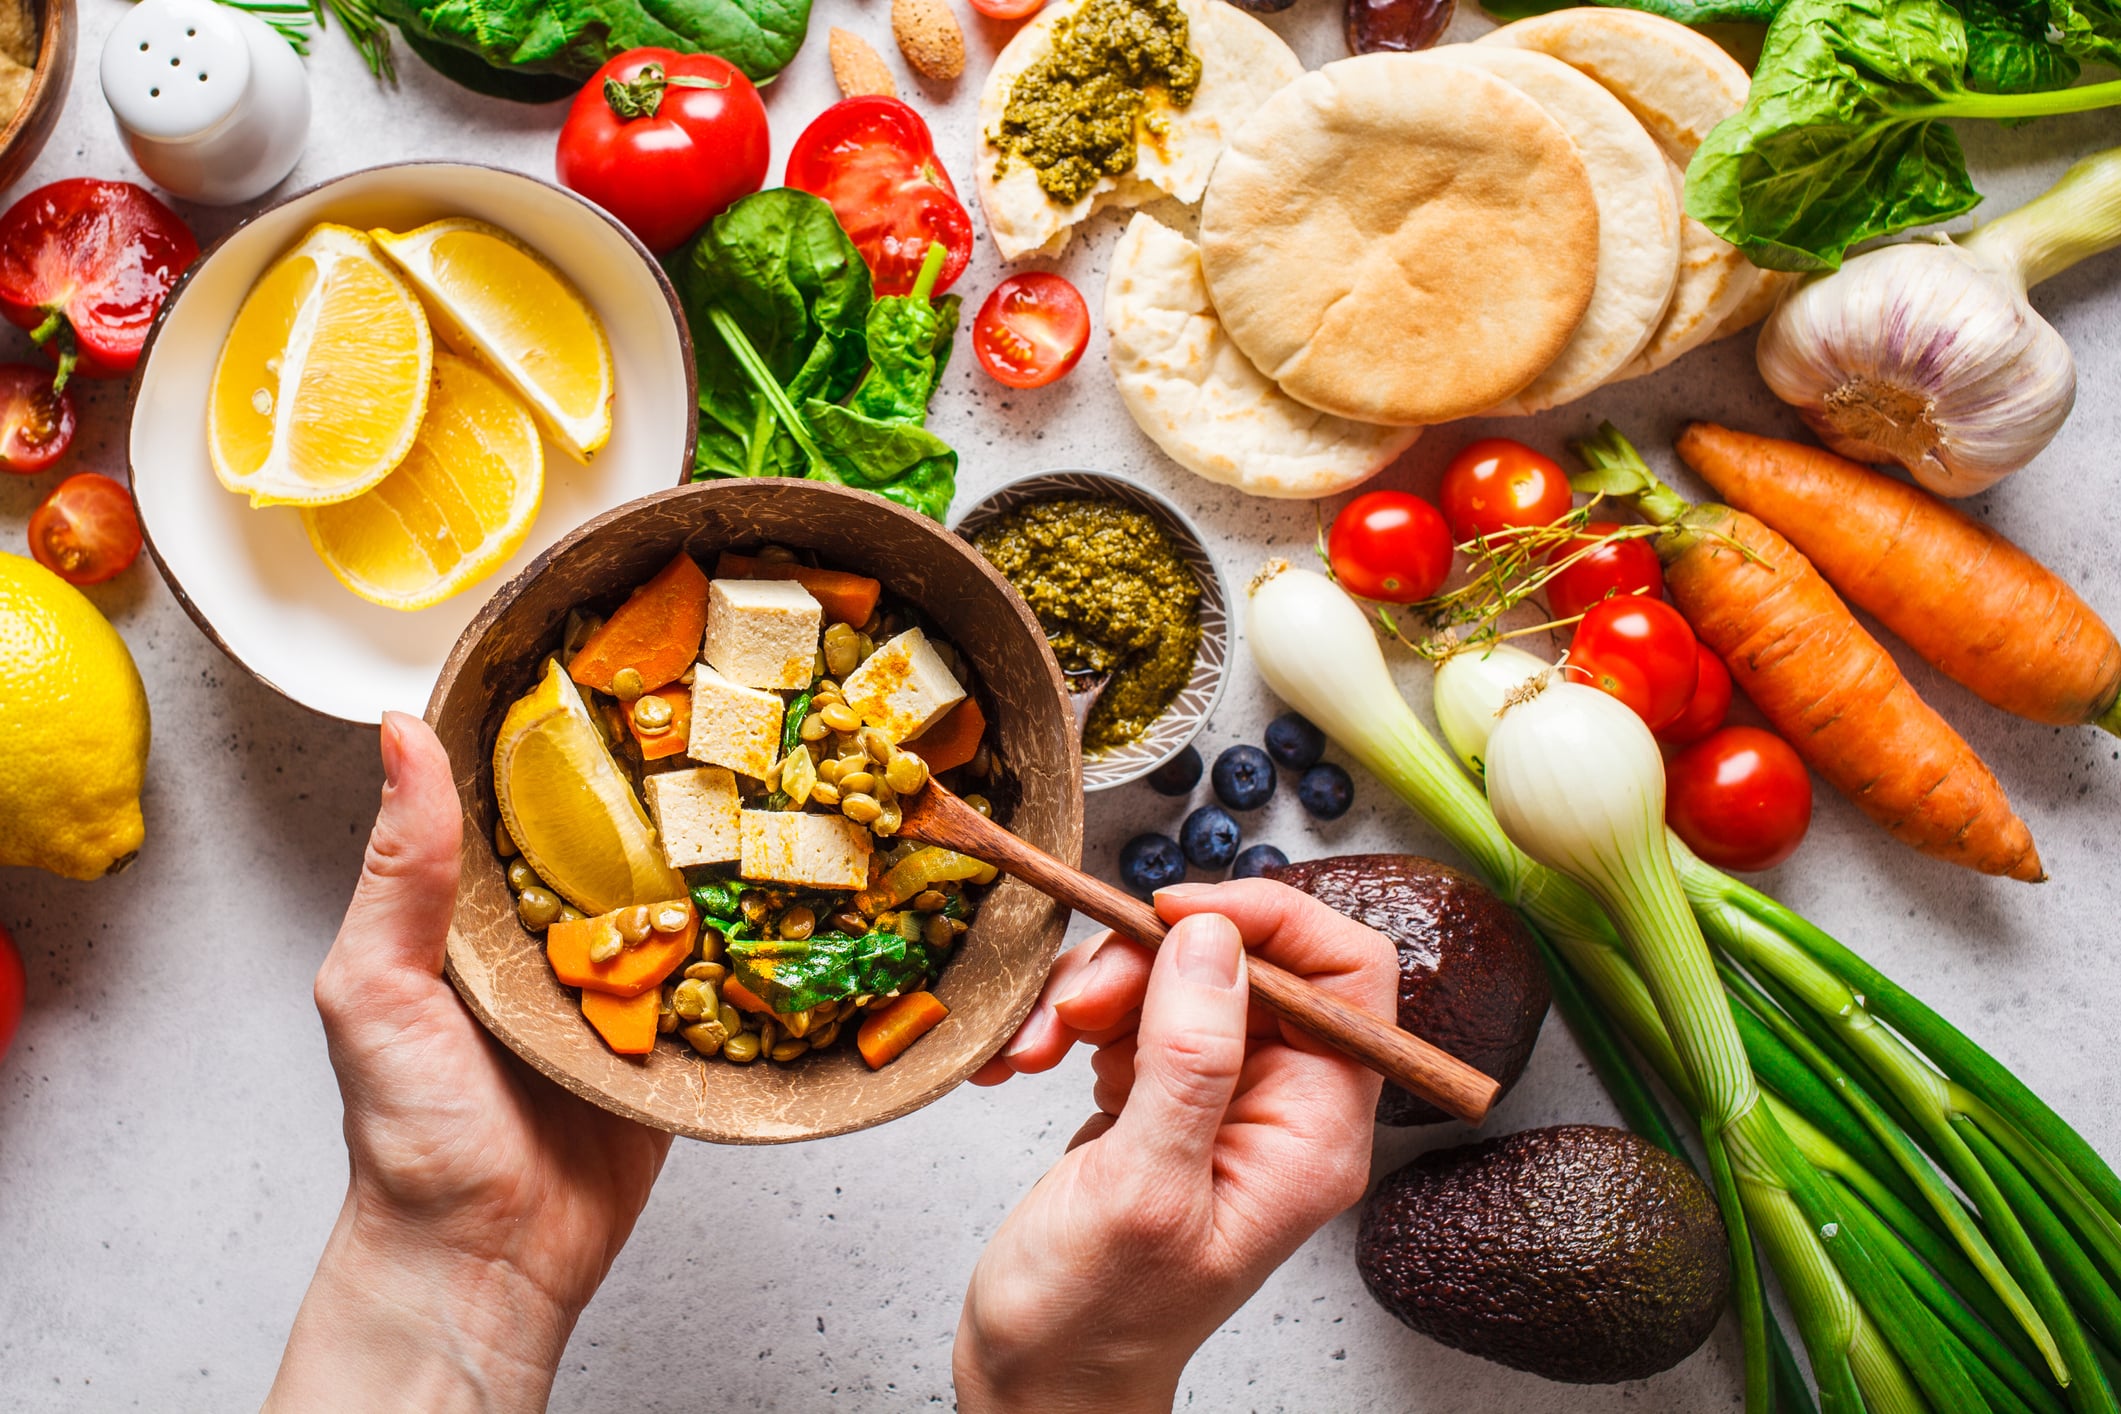 Entérate de los secretos de la dieta mediterránea verde